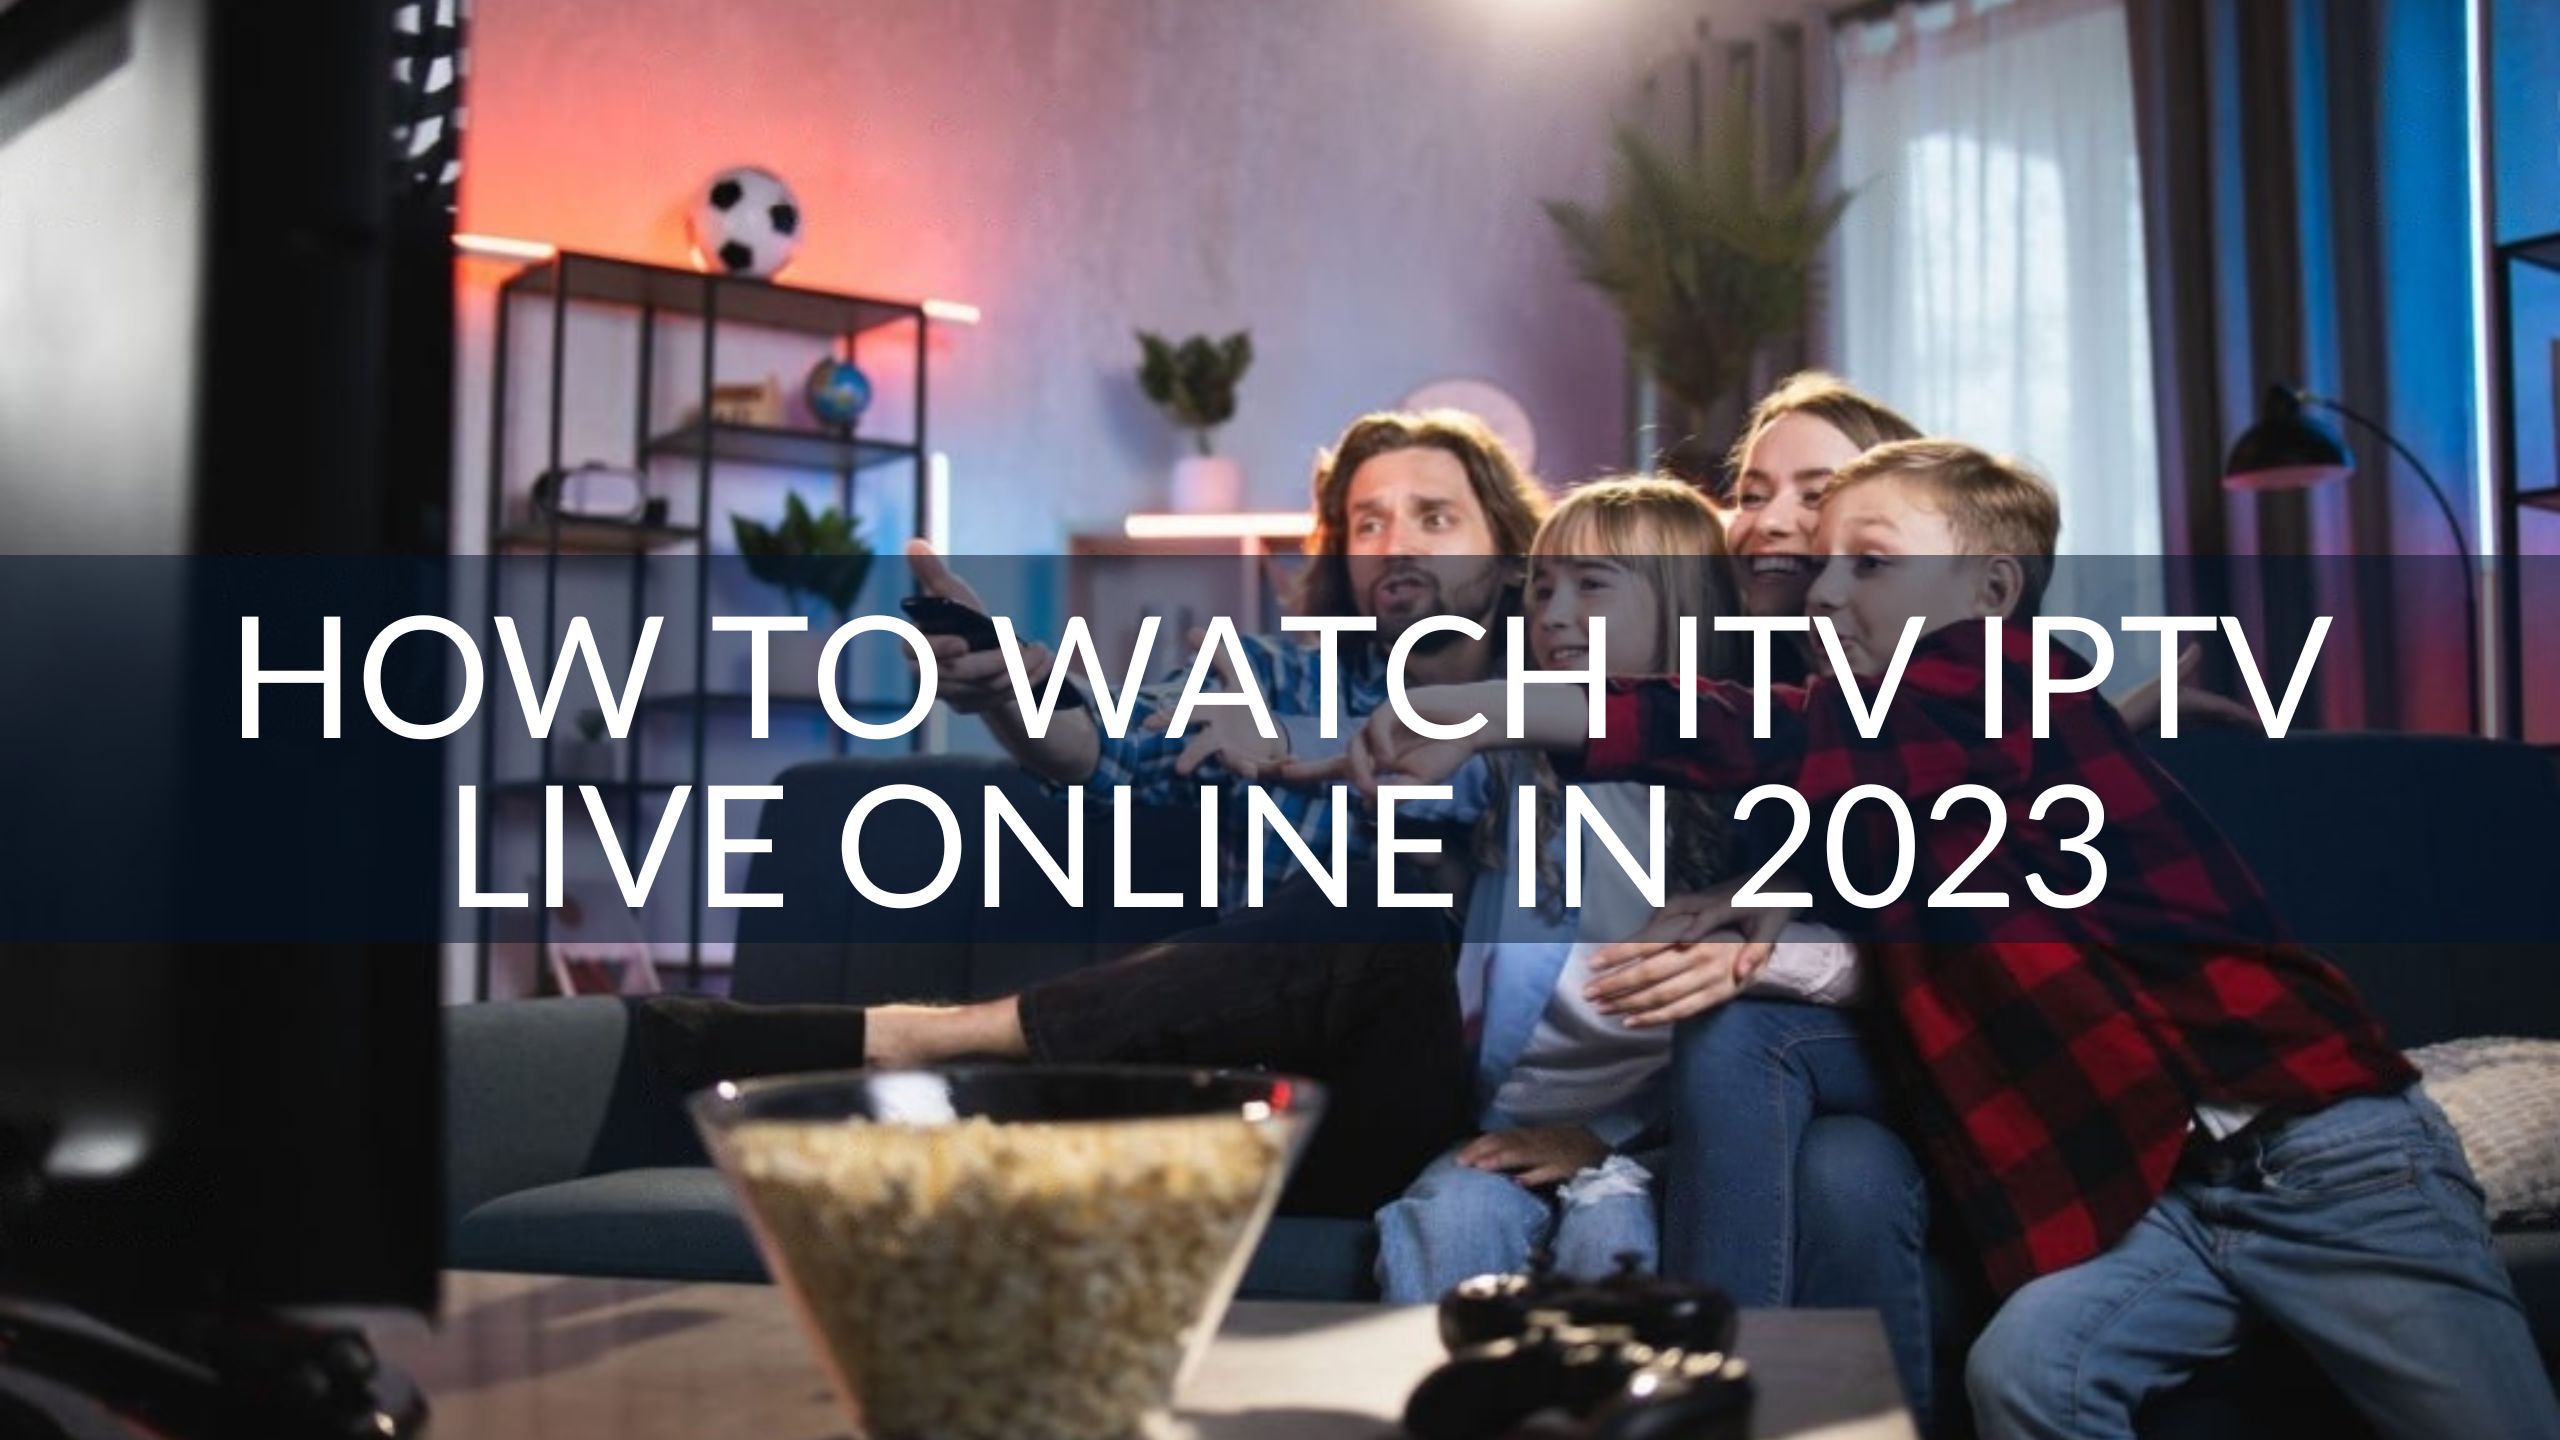 How to Watch ITV IPTV Live Online in 2023